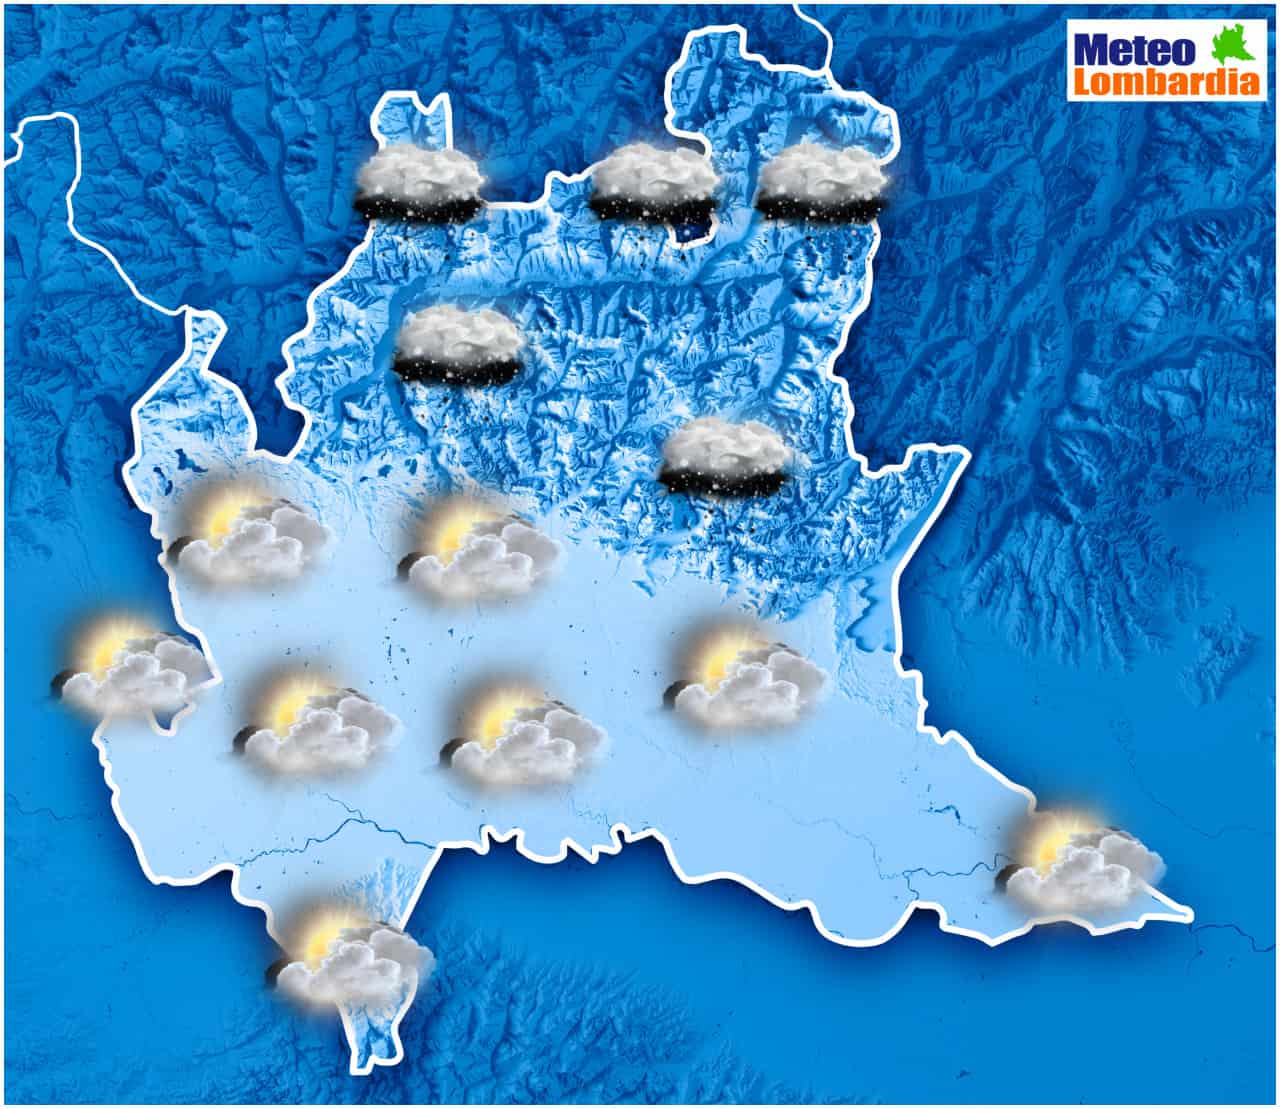 meteo lombardia weekend 8456 - Meteo Lombardia: neve su Alpi, poi uno sguardo al ciclone mediterraneo